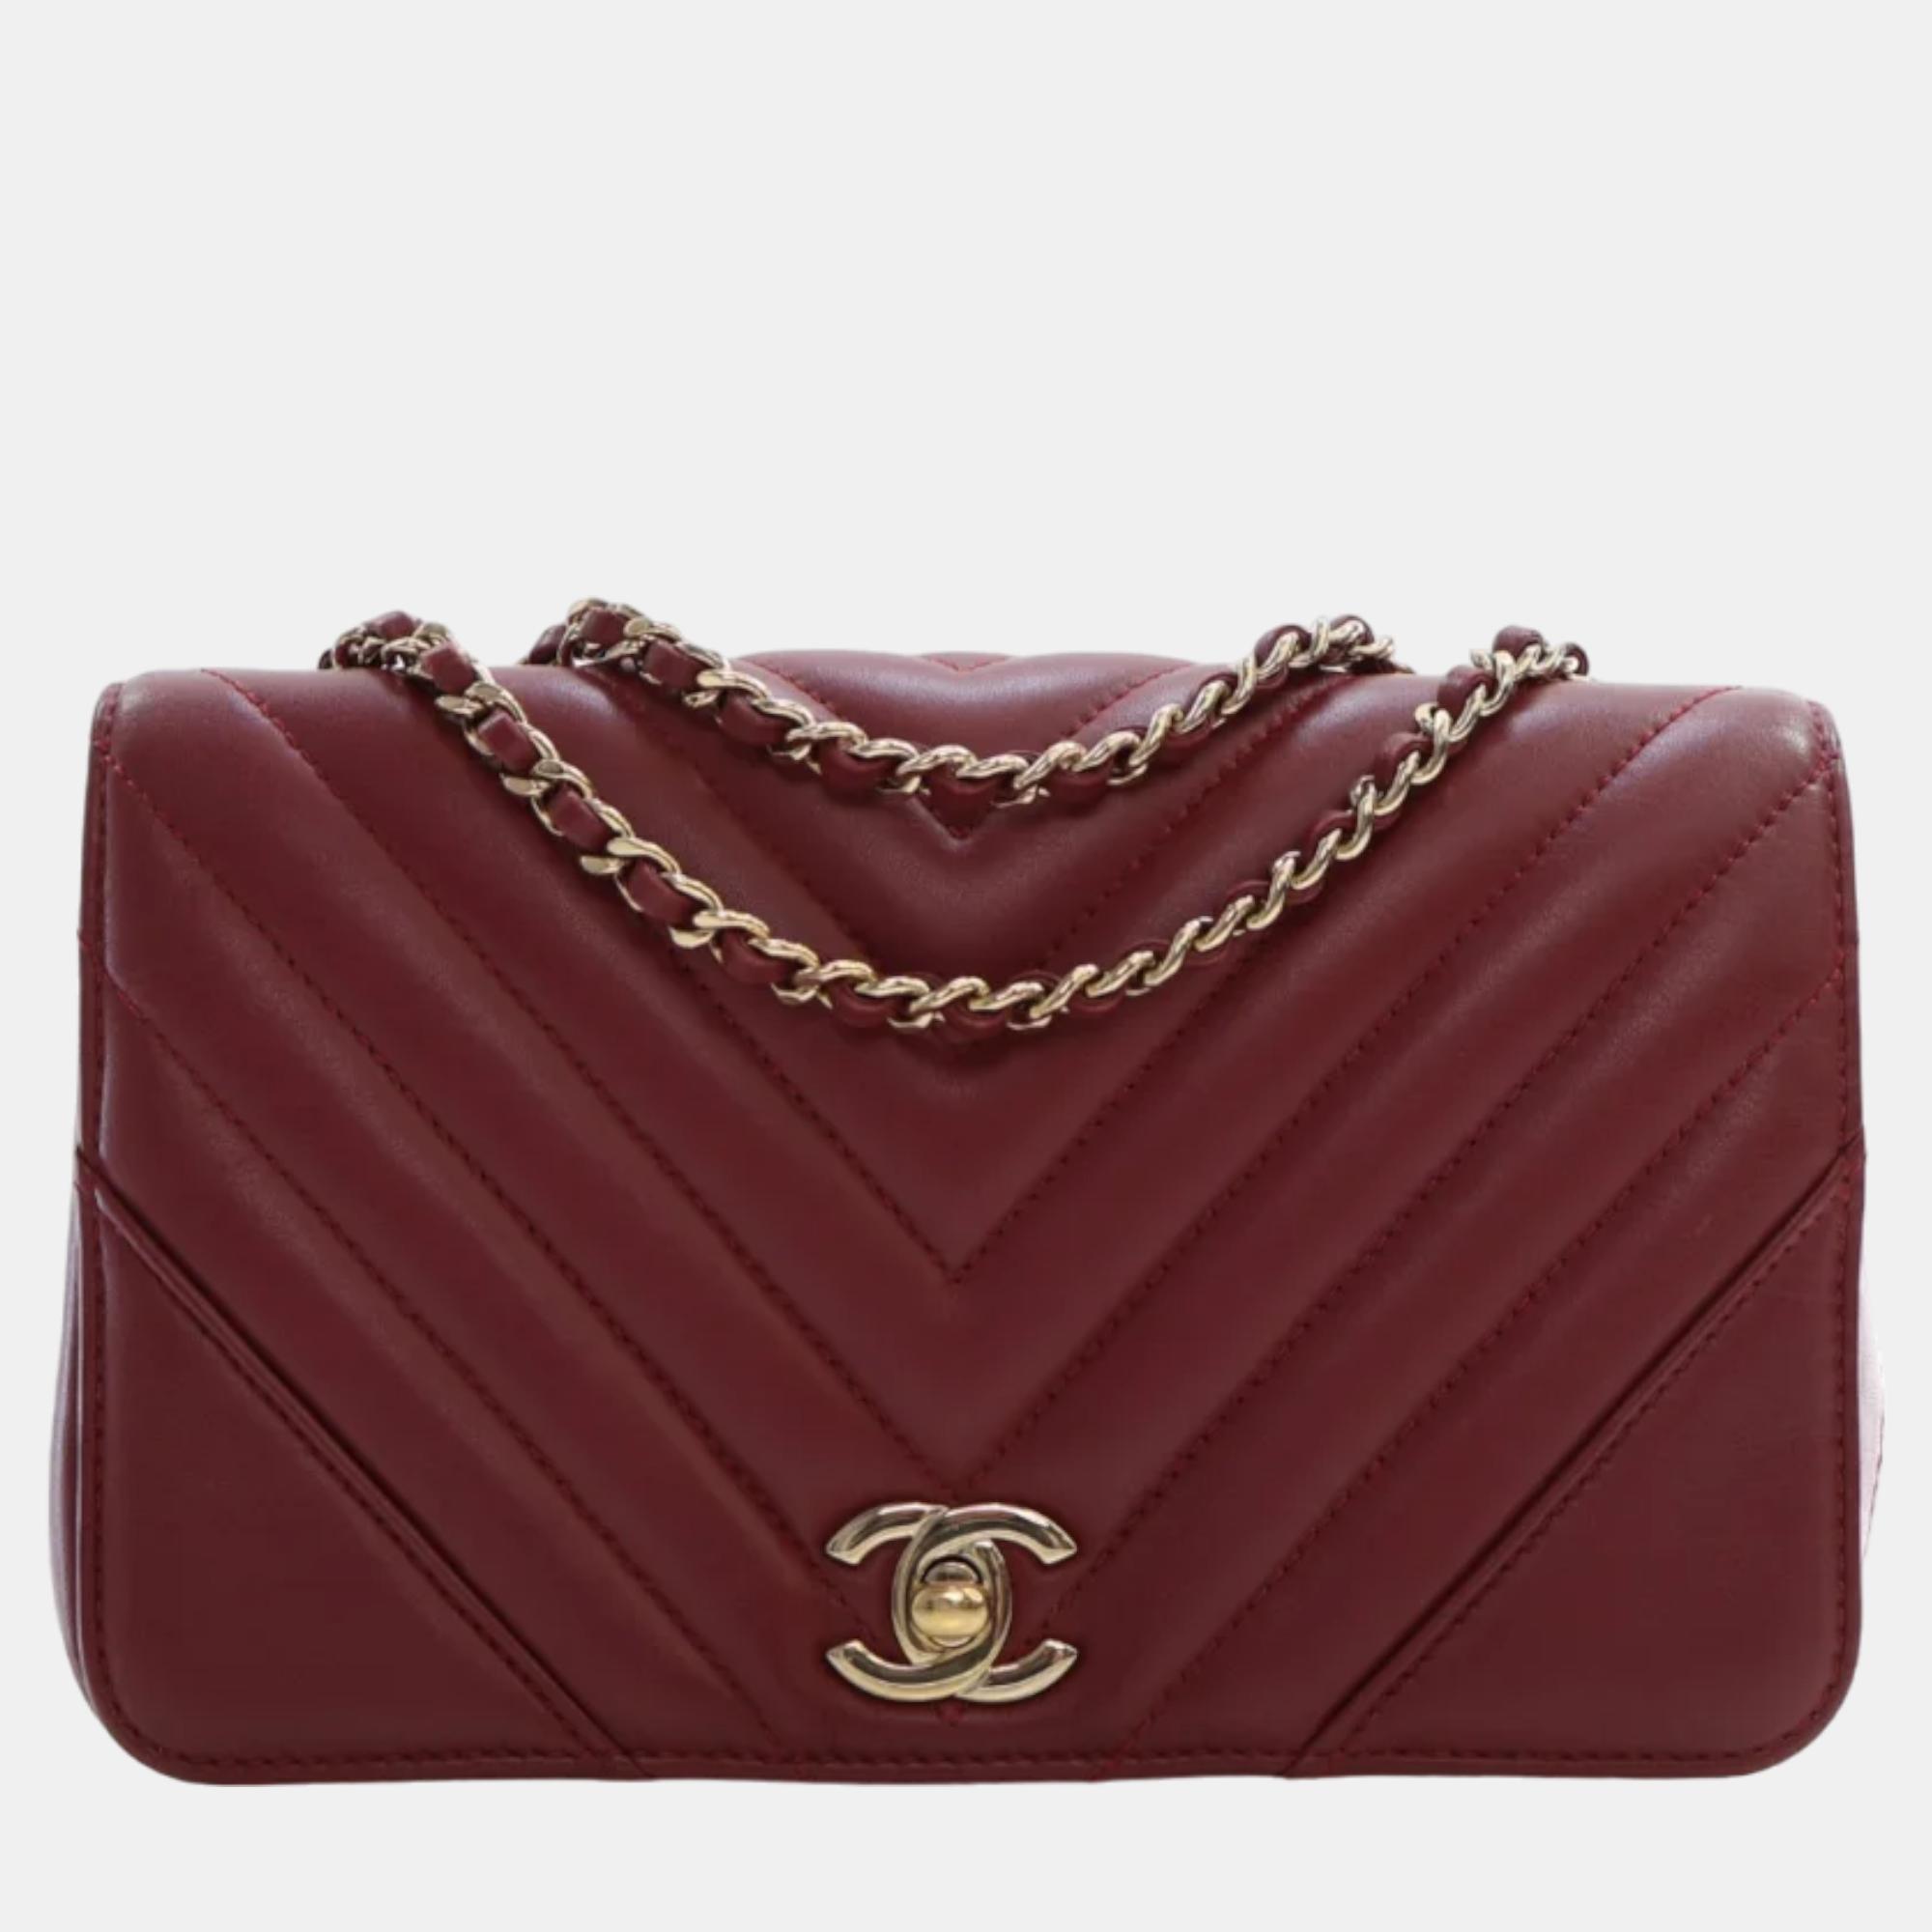 Chanel burgundy chevron leather medium statement flap bag